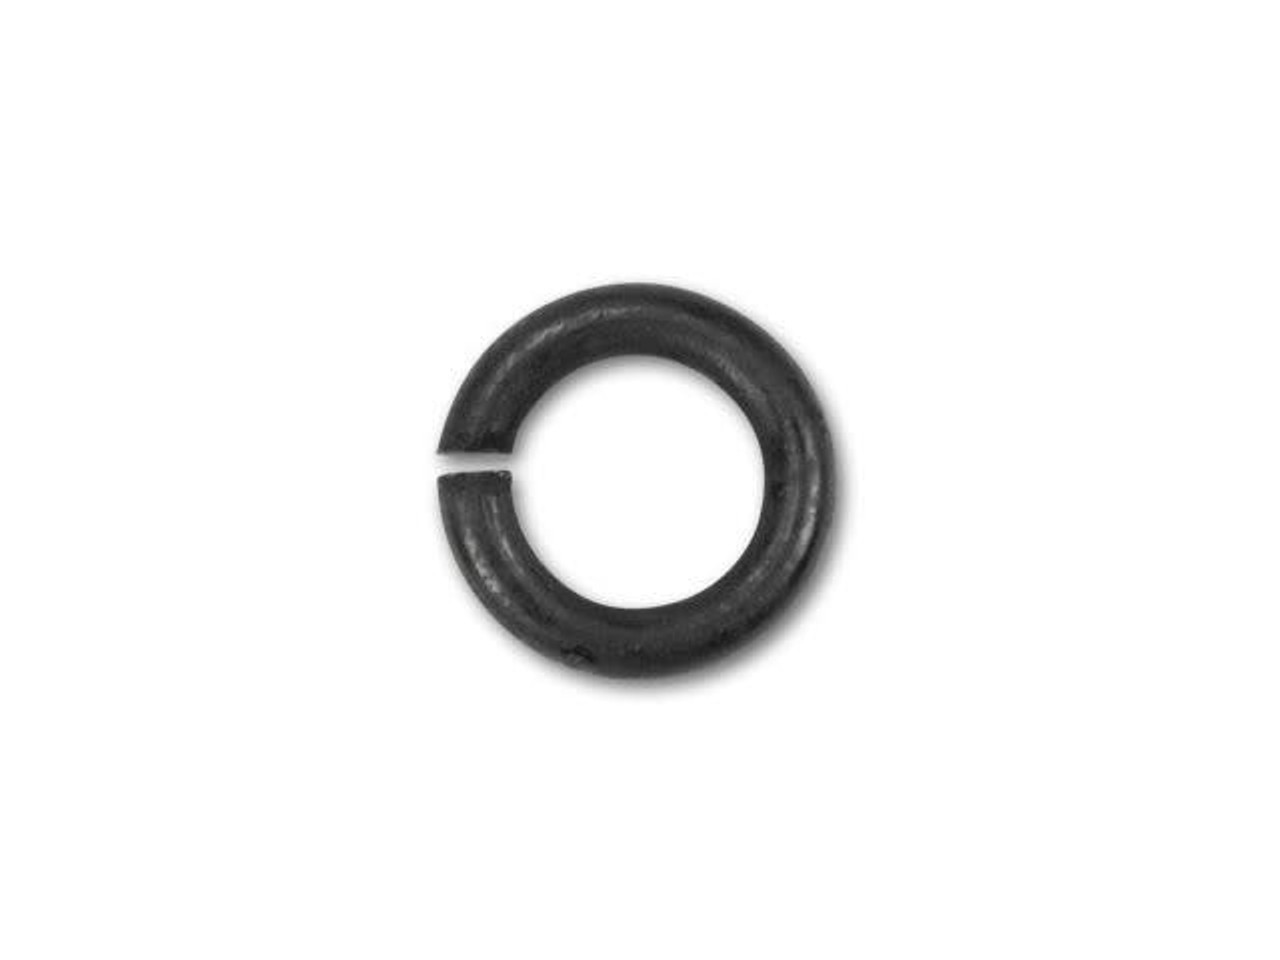 MATTE BLACK ICE / 5mm 18 GA Jump Rings / 5 Gram Pack (approx 130